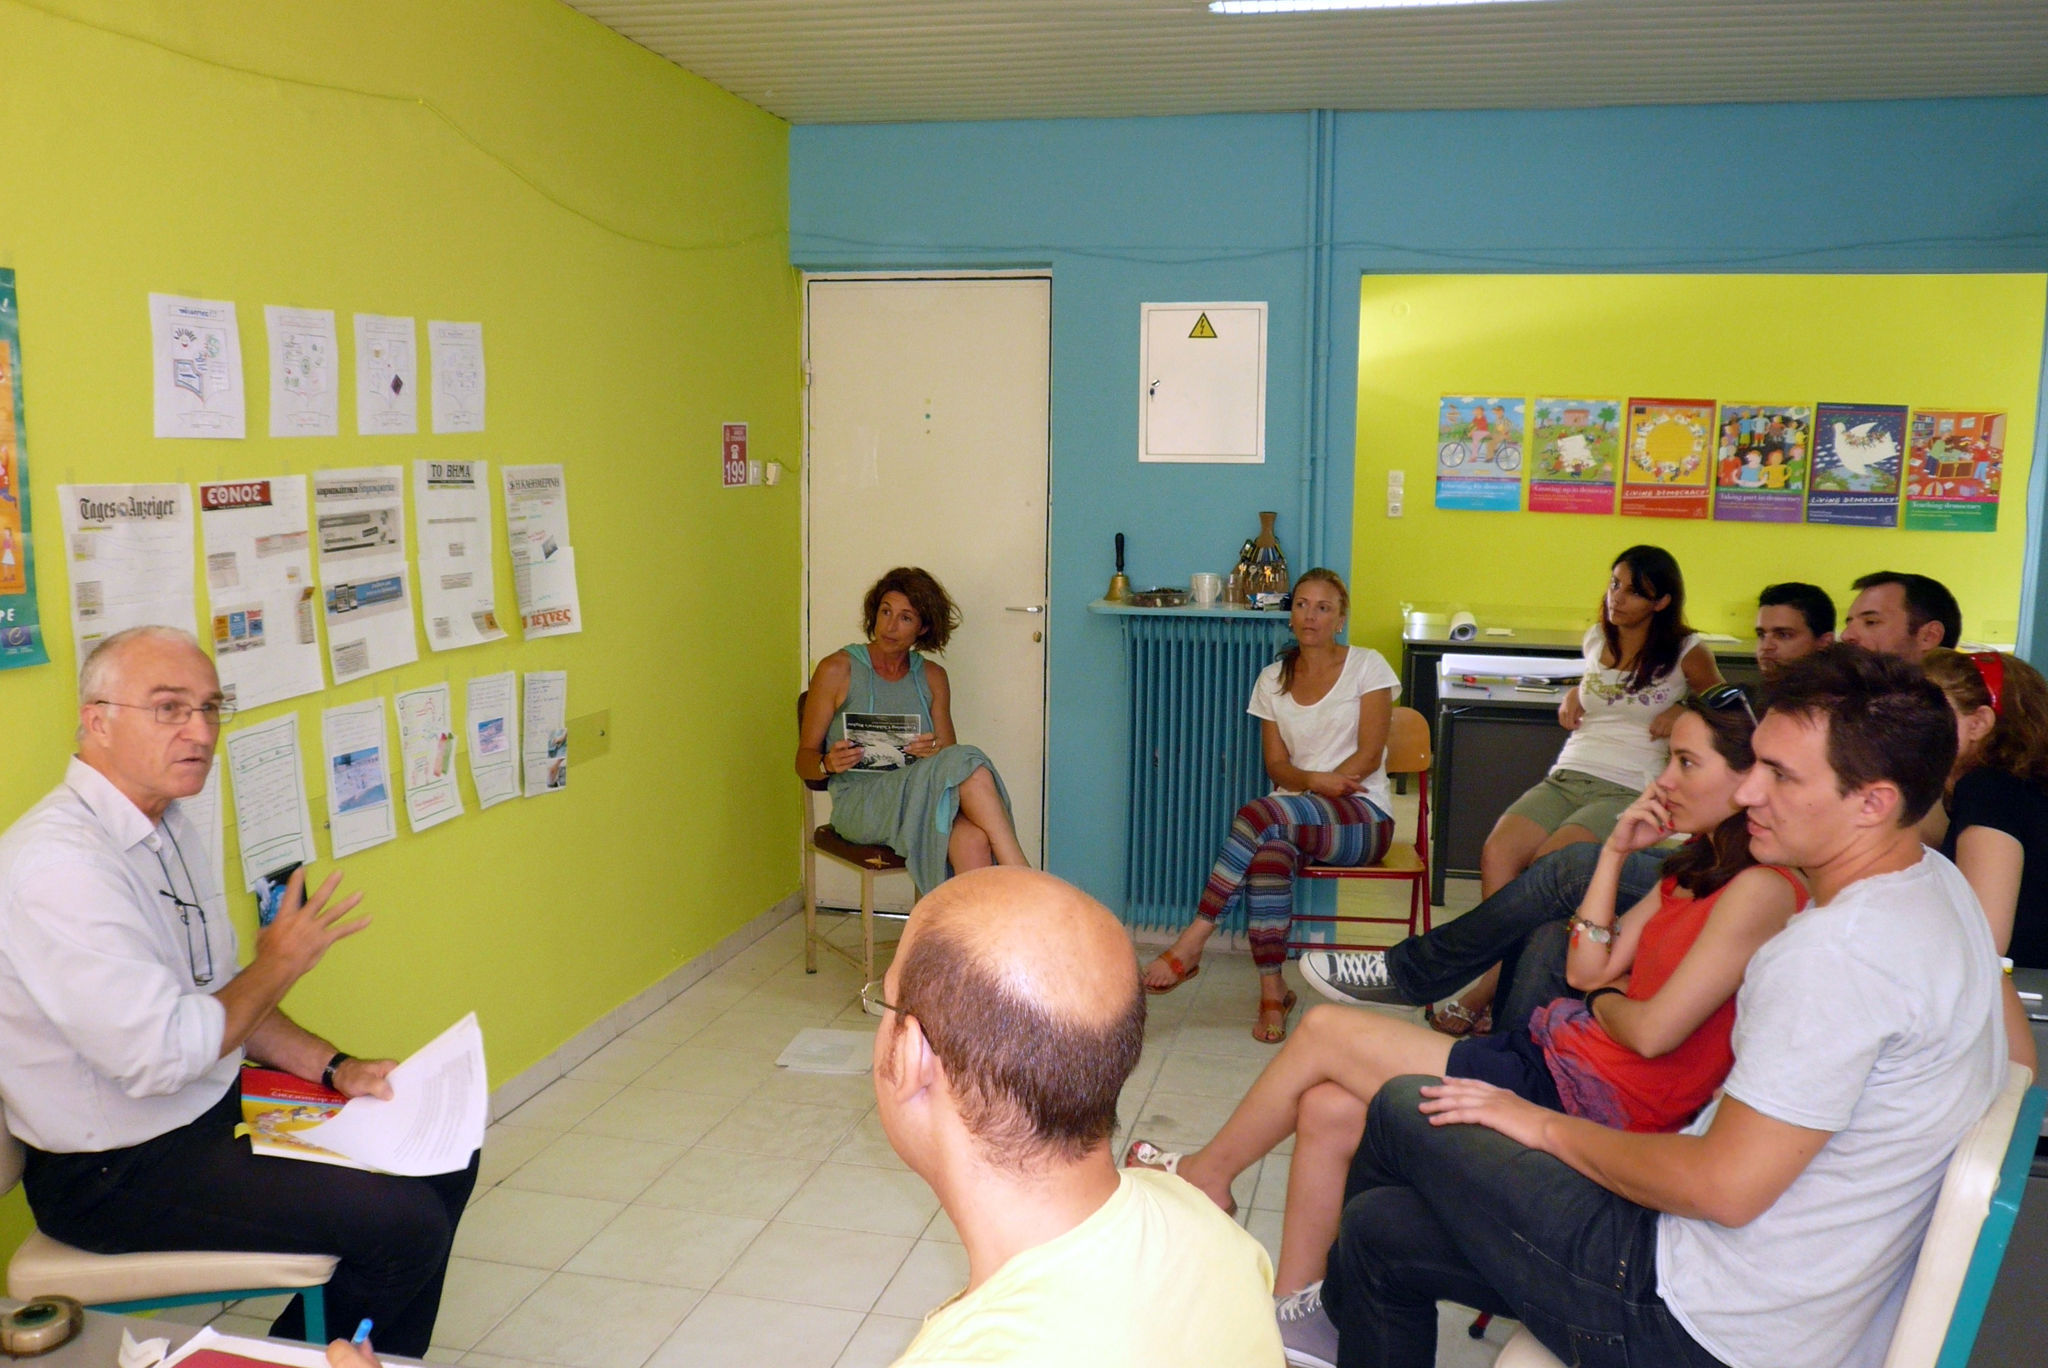 Workshop "Lving Democracy", Schule Palaio Faliro, Athen